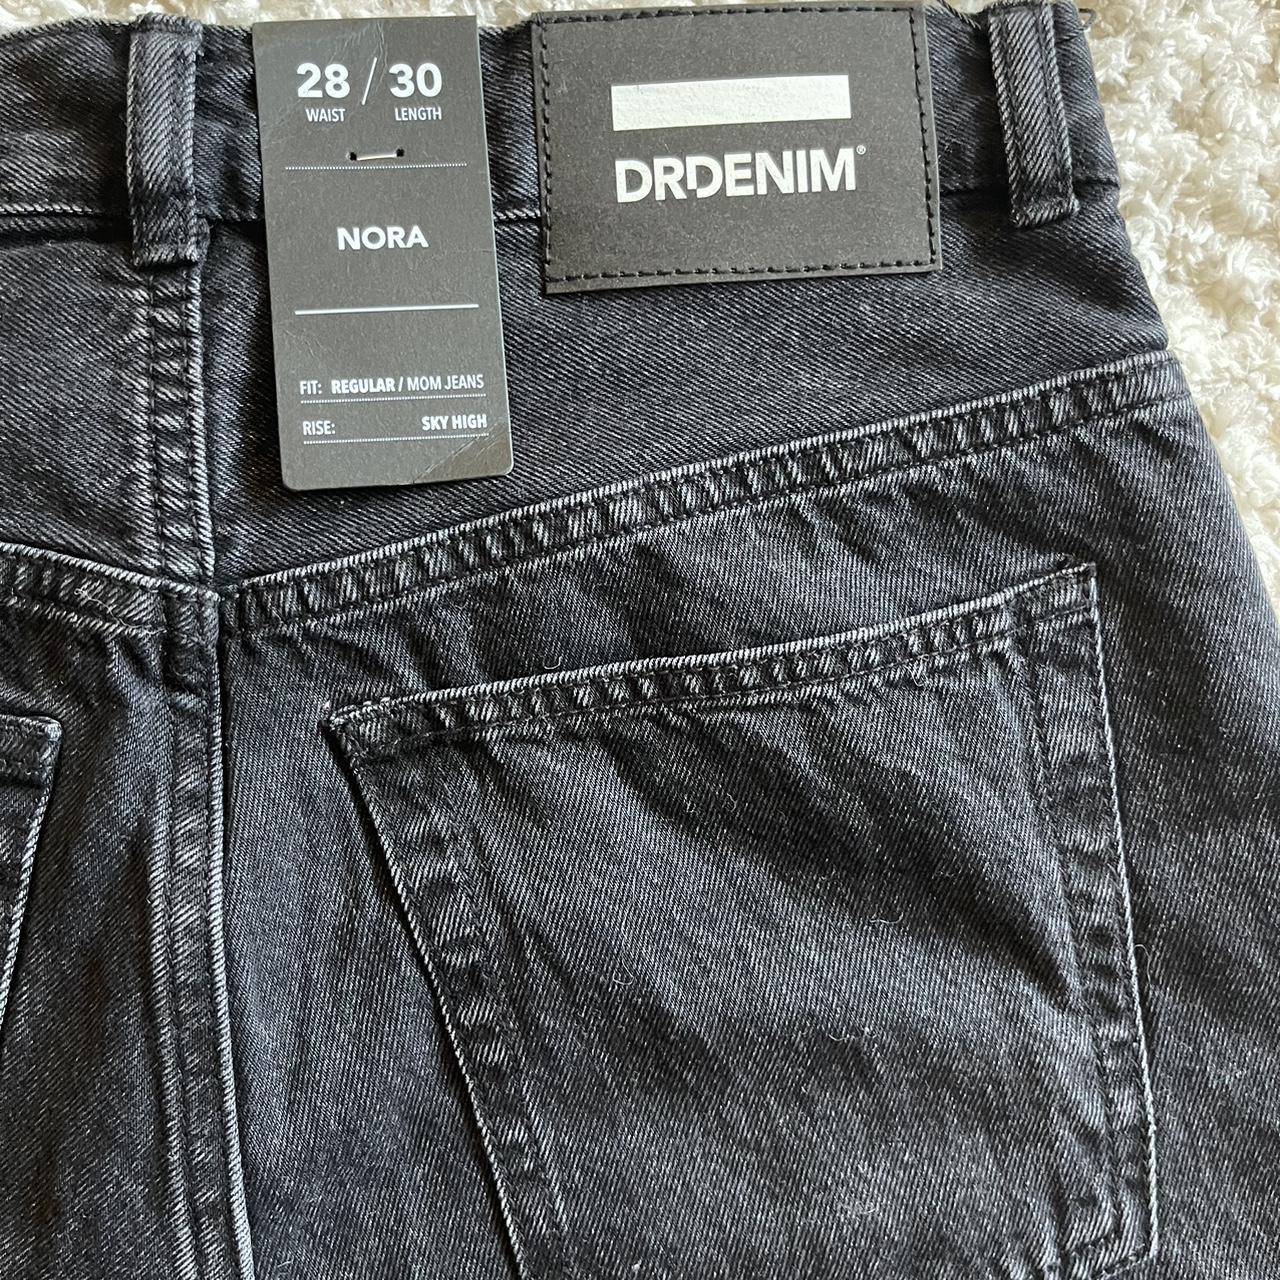 Dr. Denim Women's Black Jeans (5)